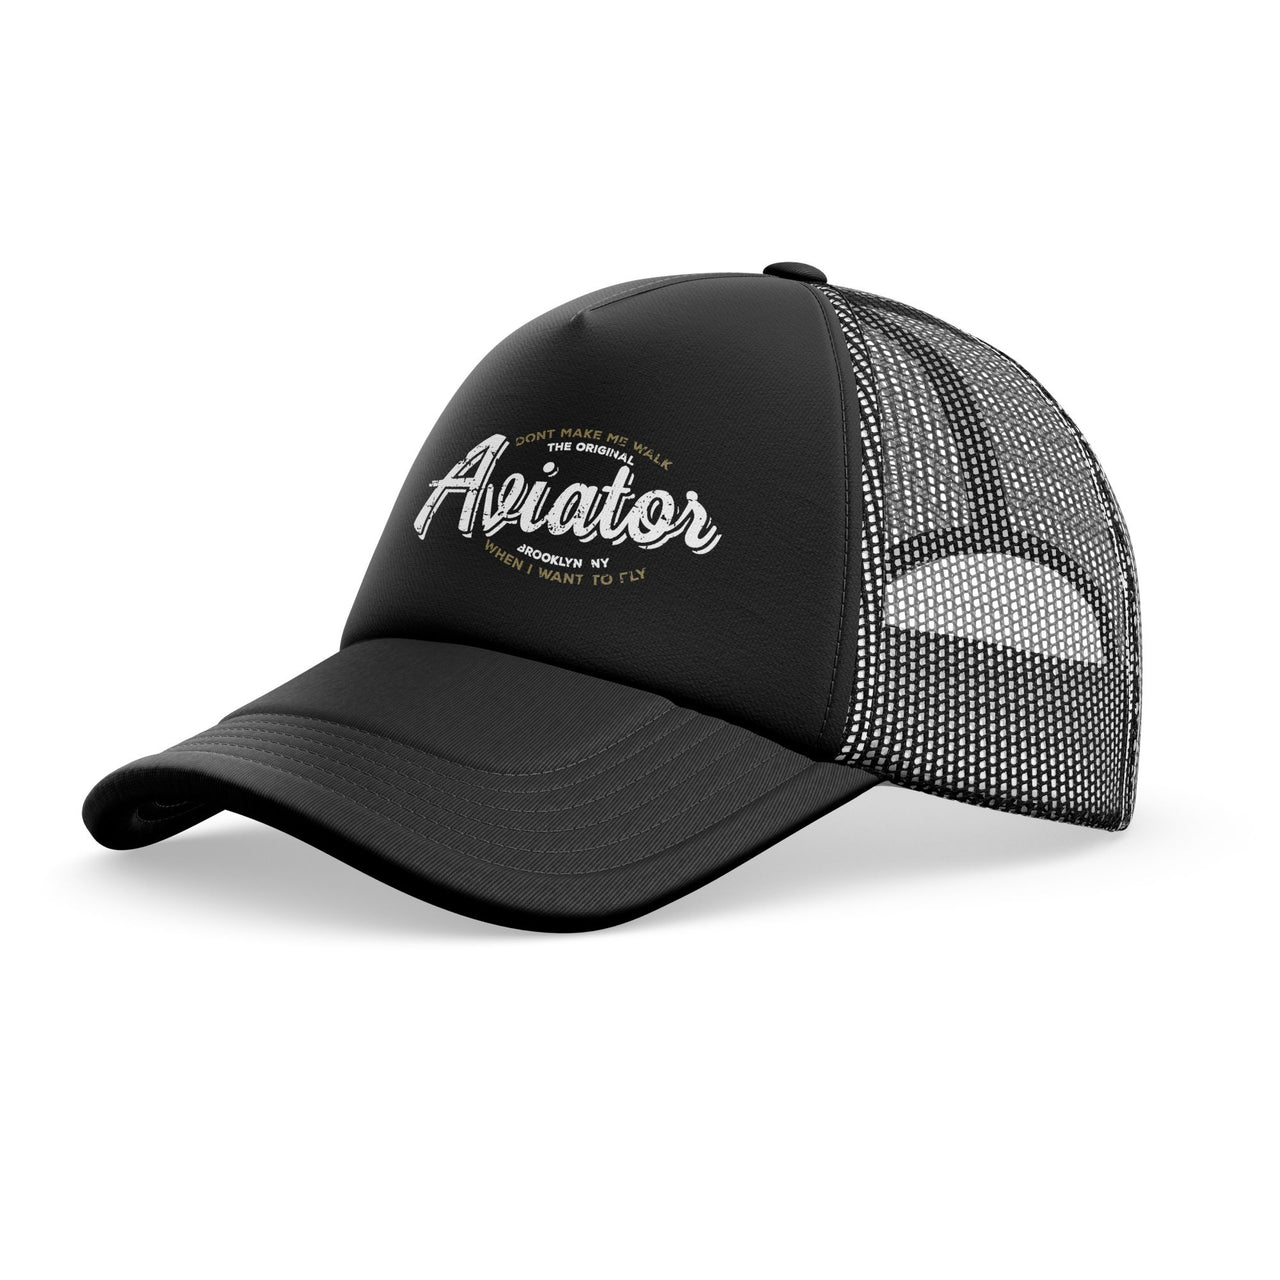 Aviator - Dont Make Me Walk Designed Trucker Caps & Hats